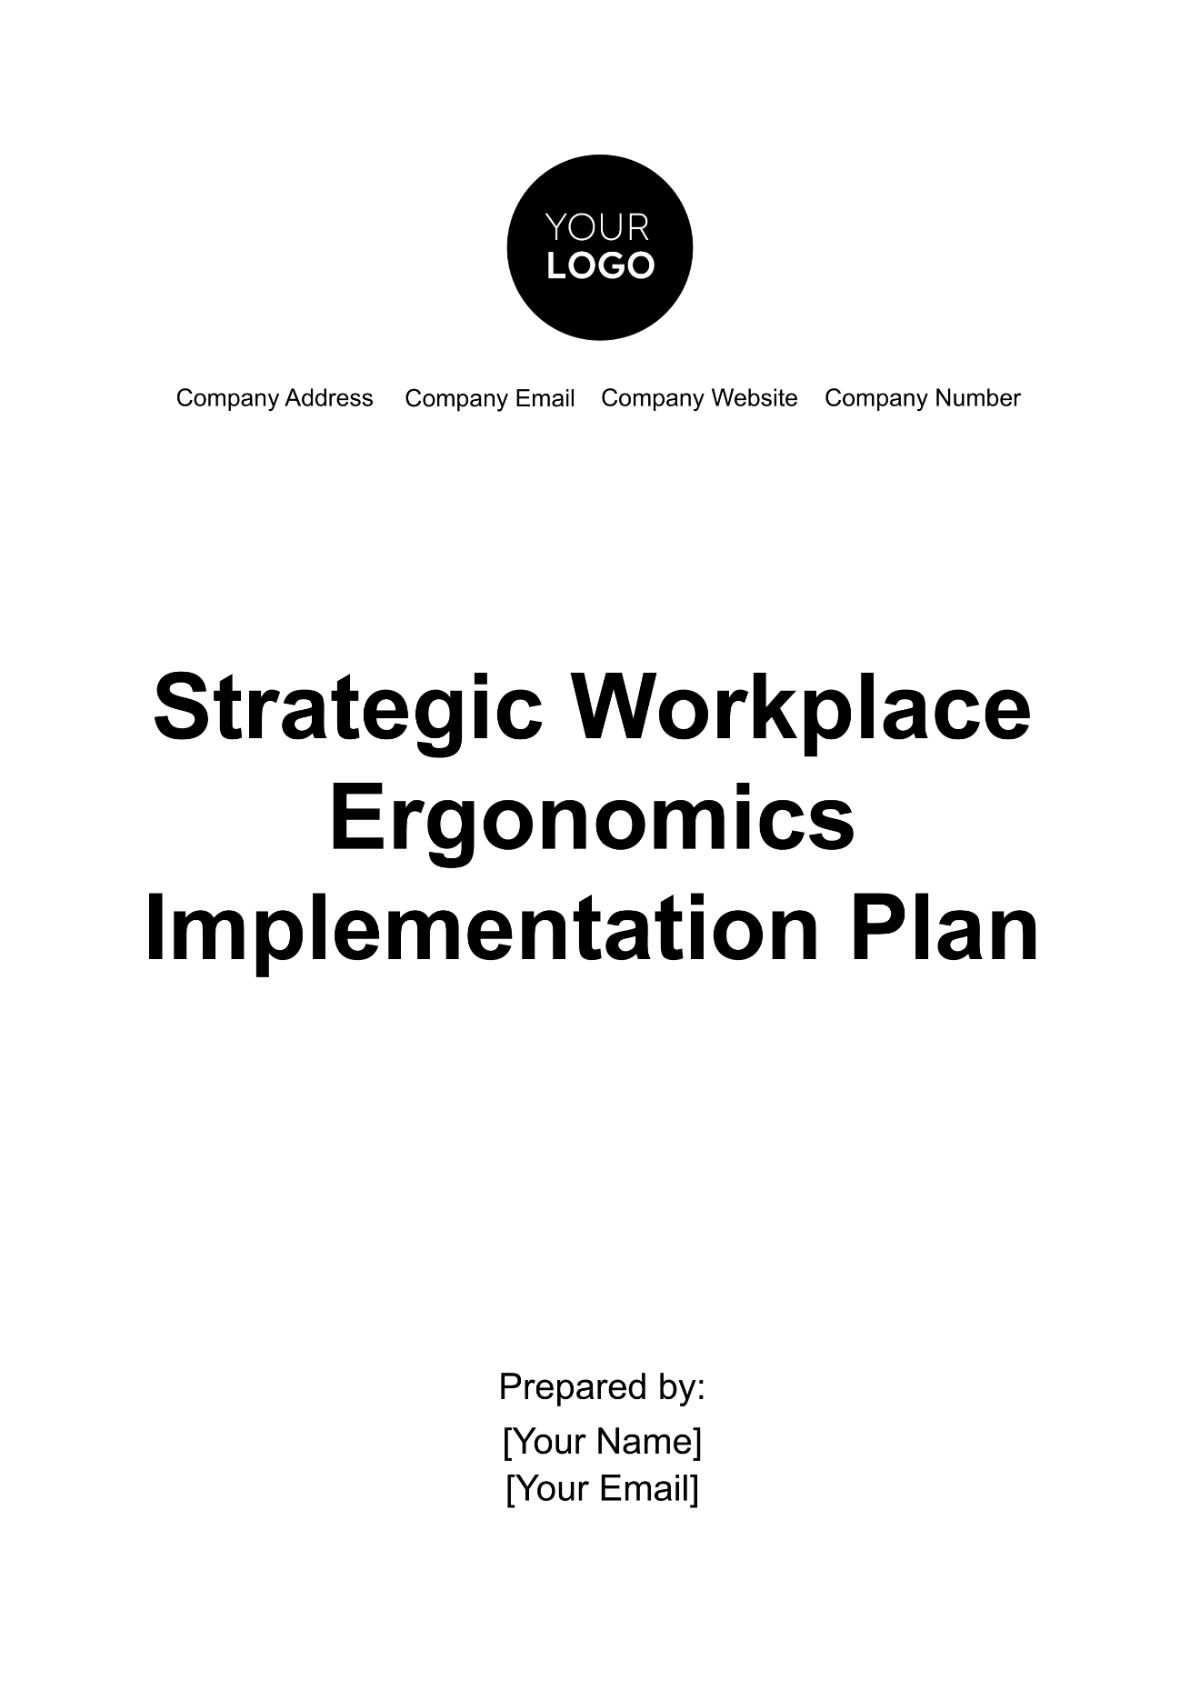 Strategic Workplace Ergonomics Implementation Plan Template